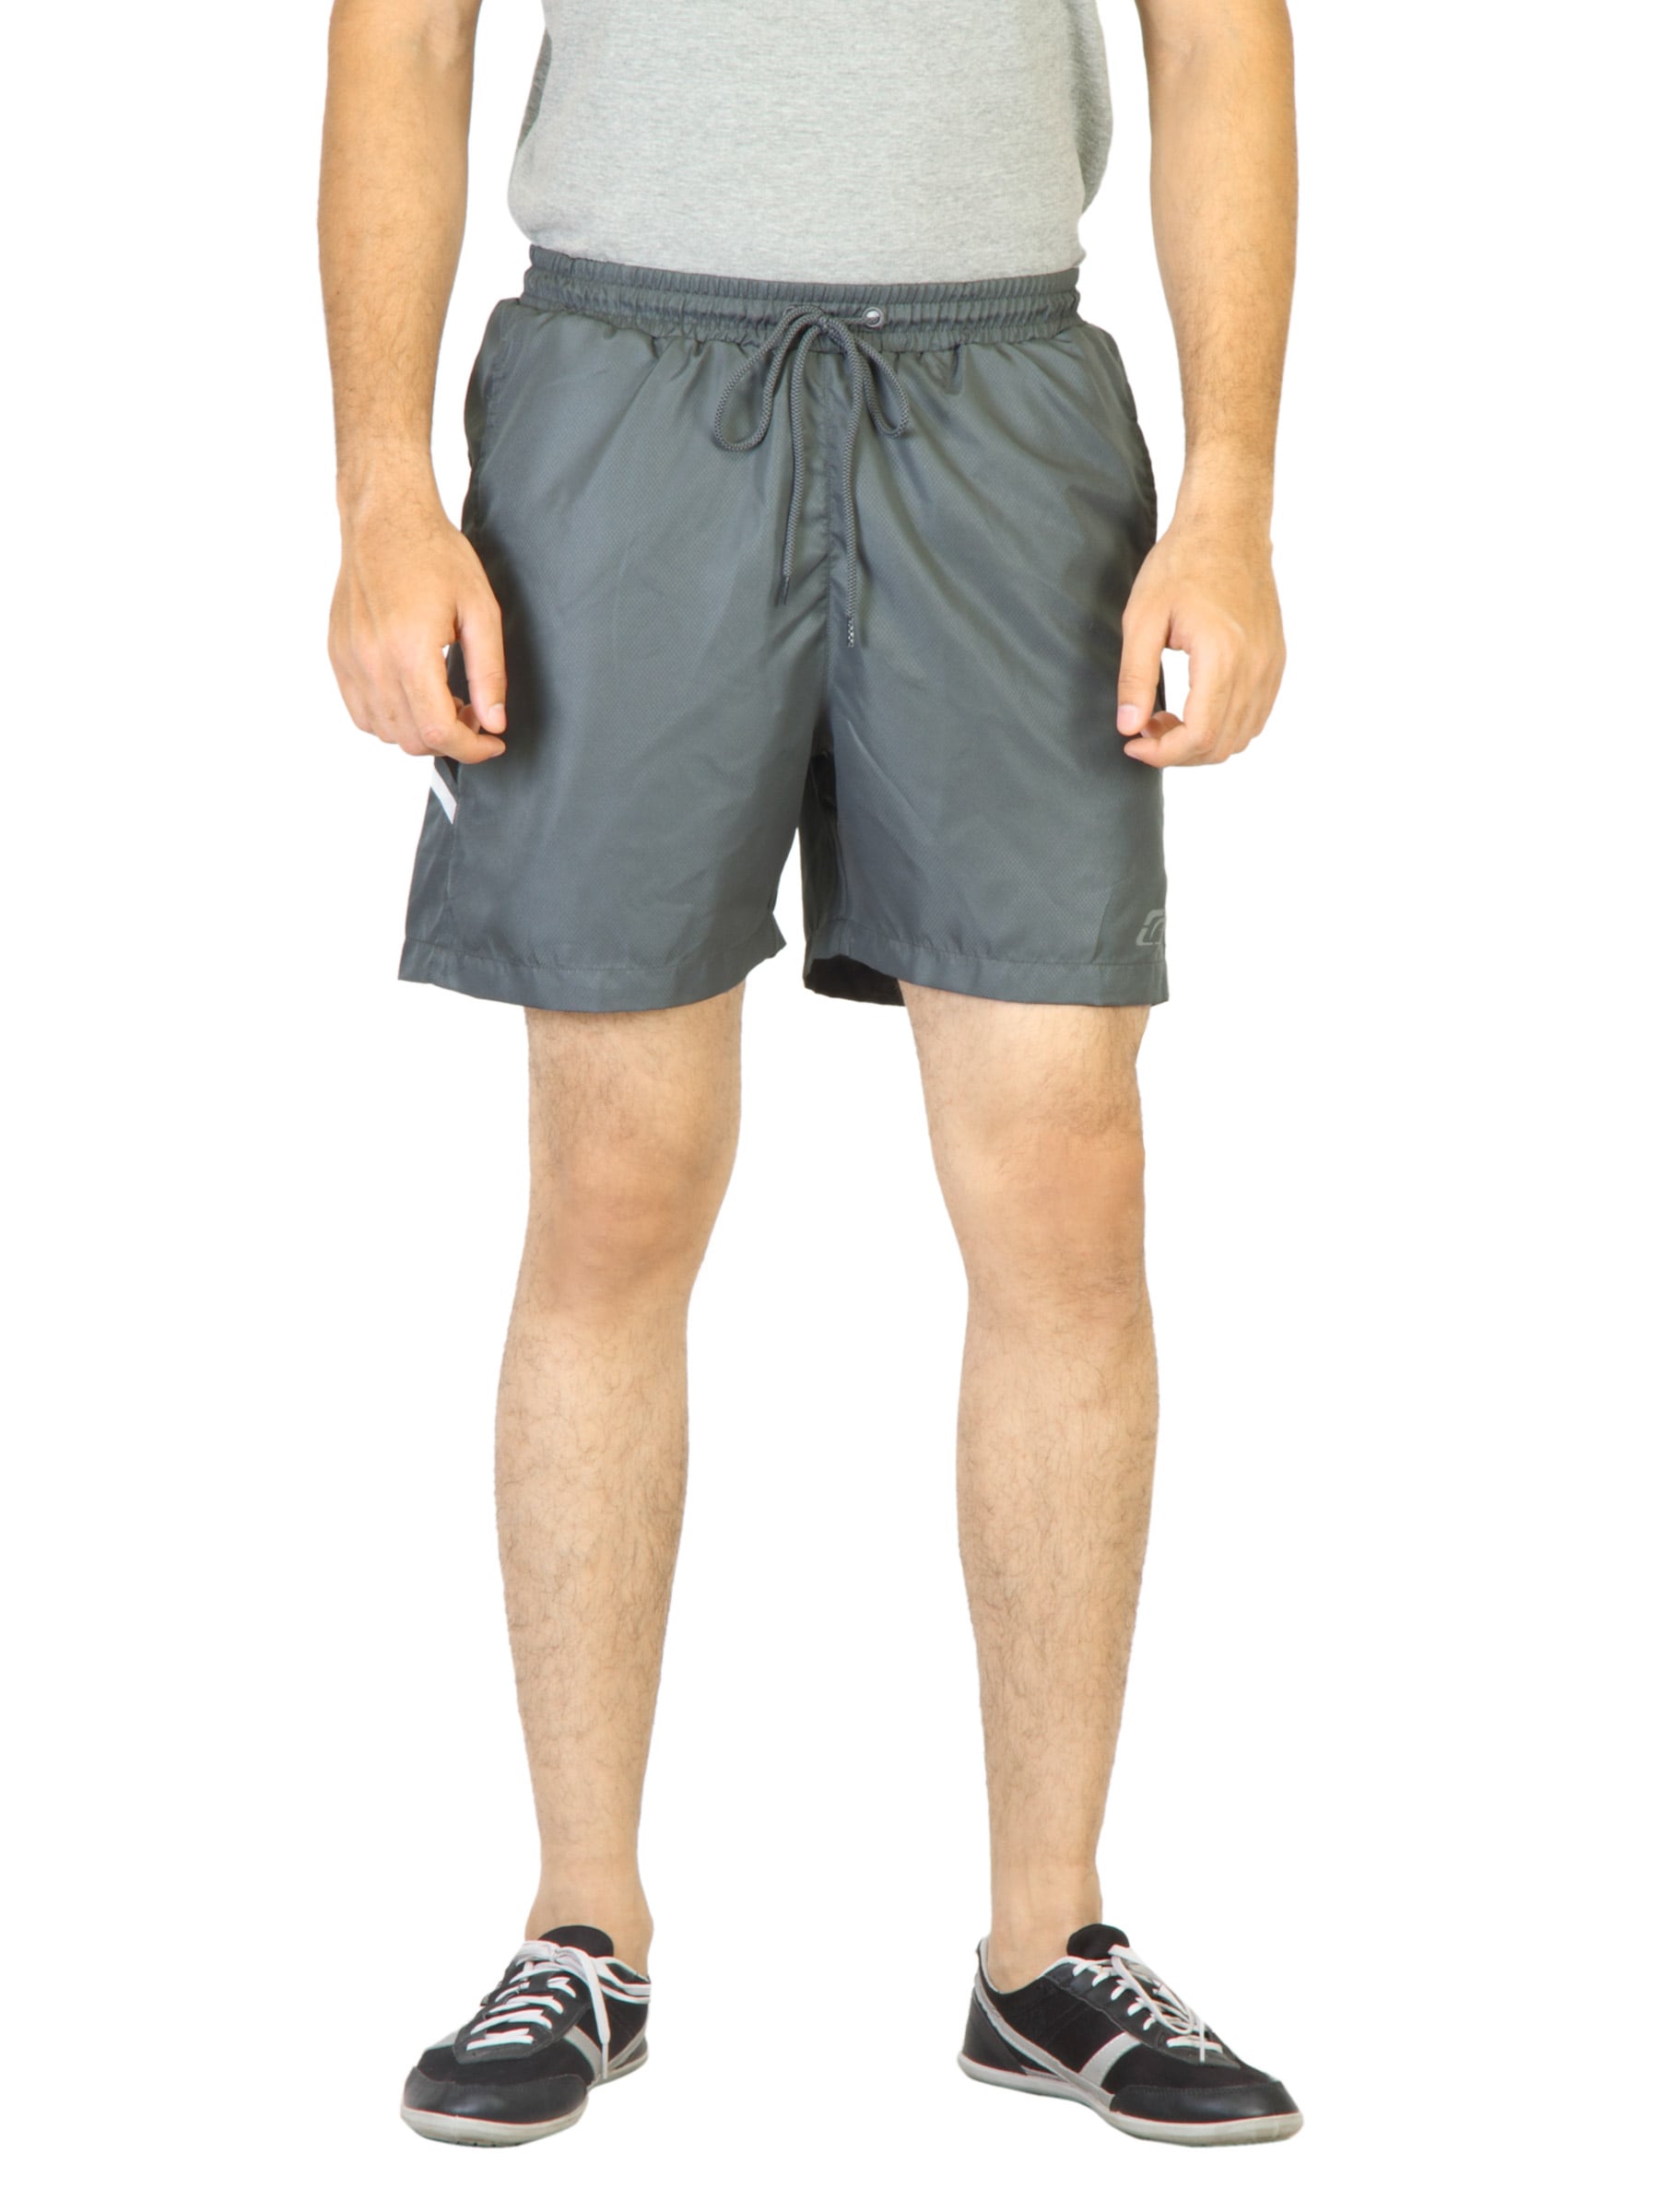 Proline Grey Shorts